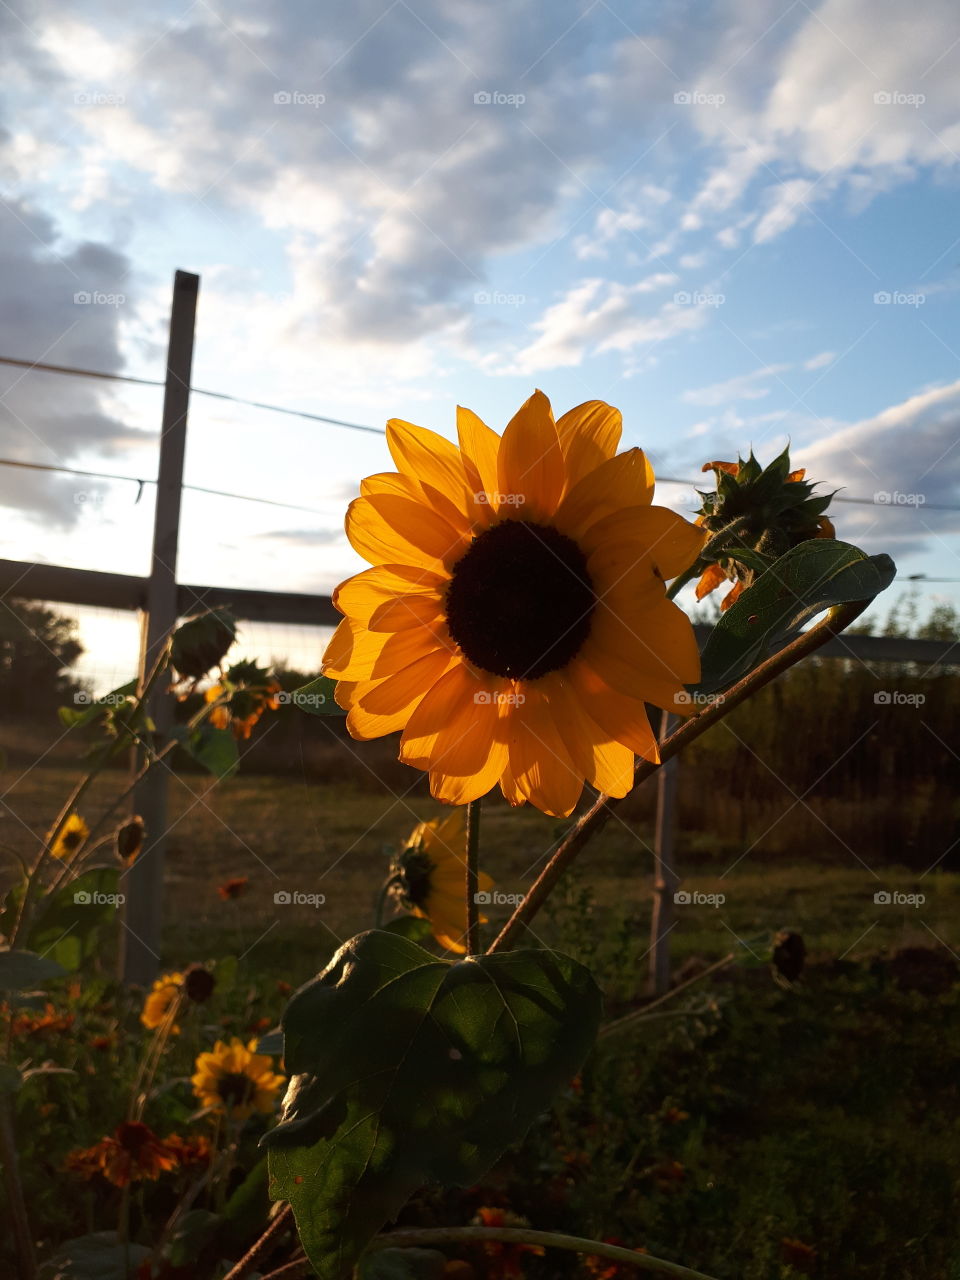 Golden hour sunflower